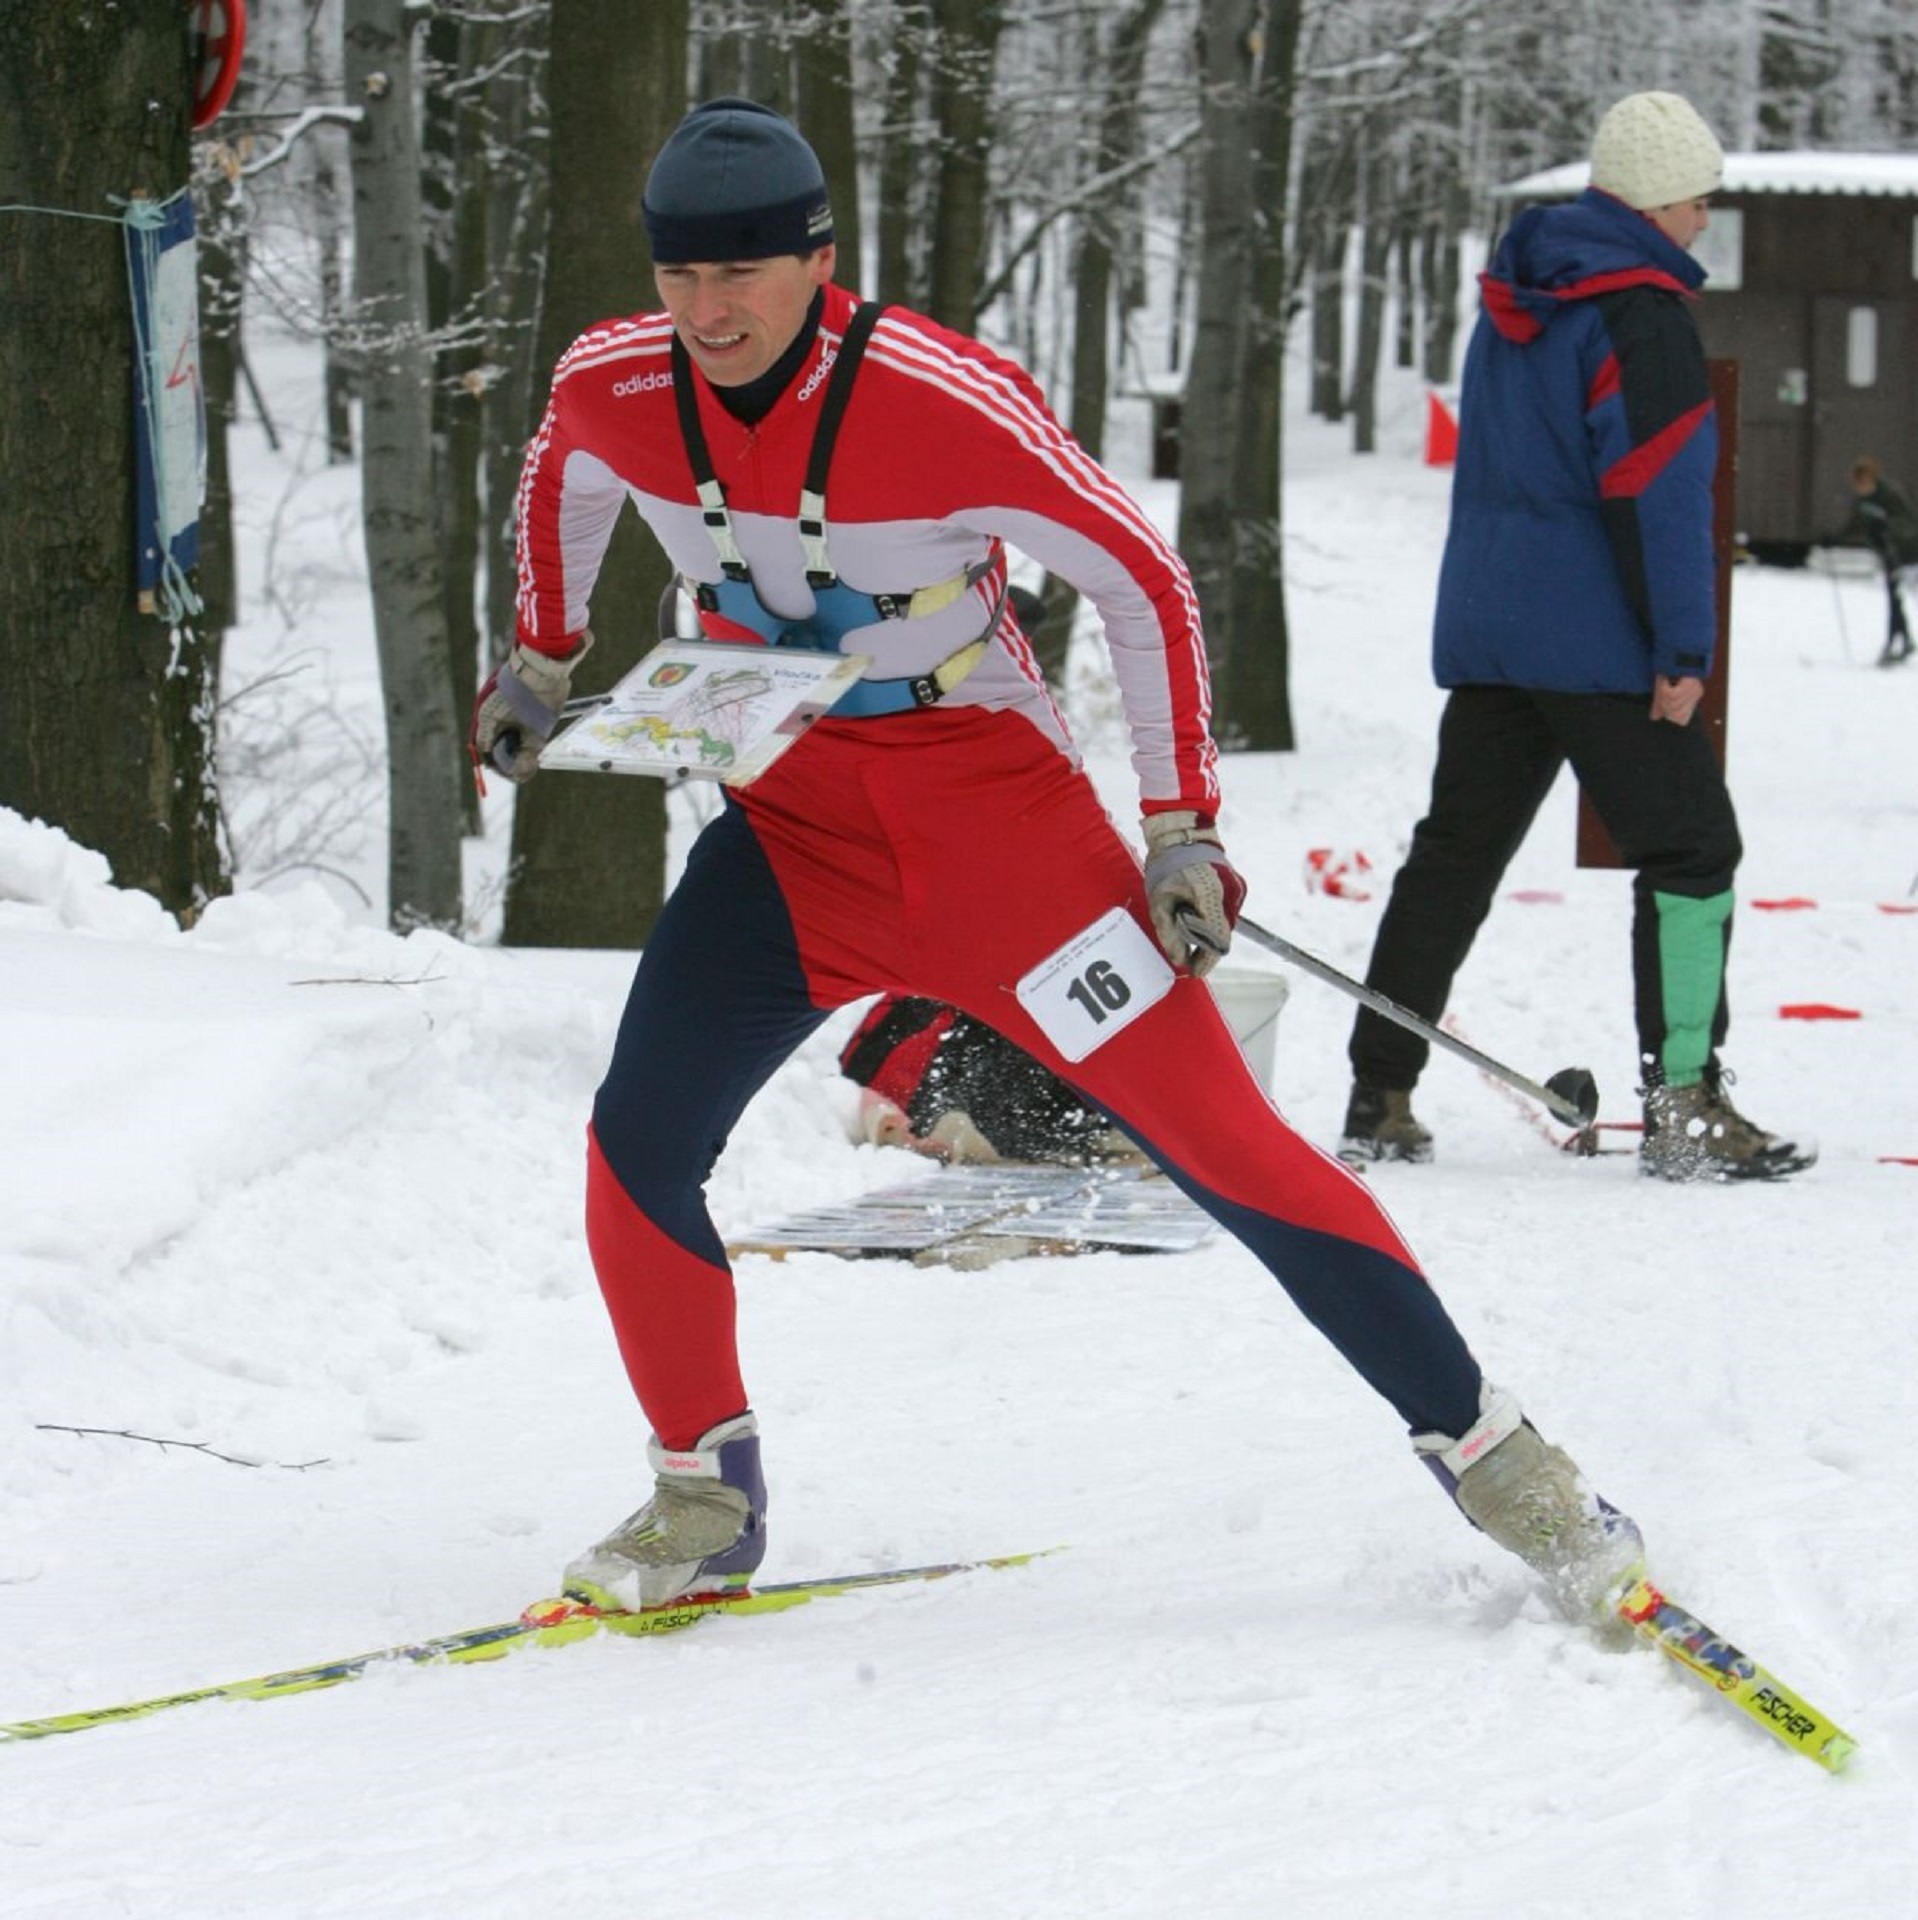 Skiing in winter photo